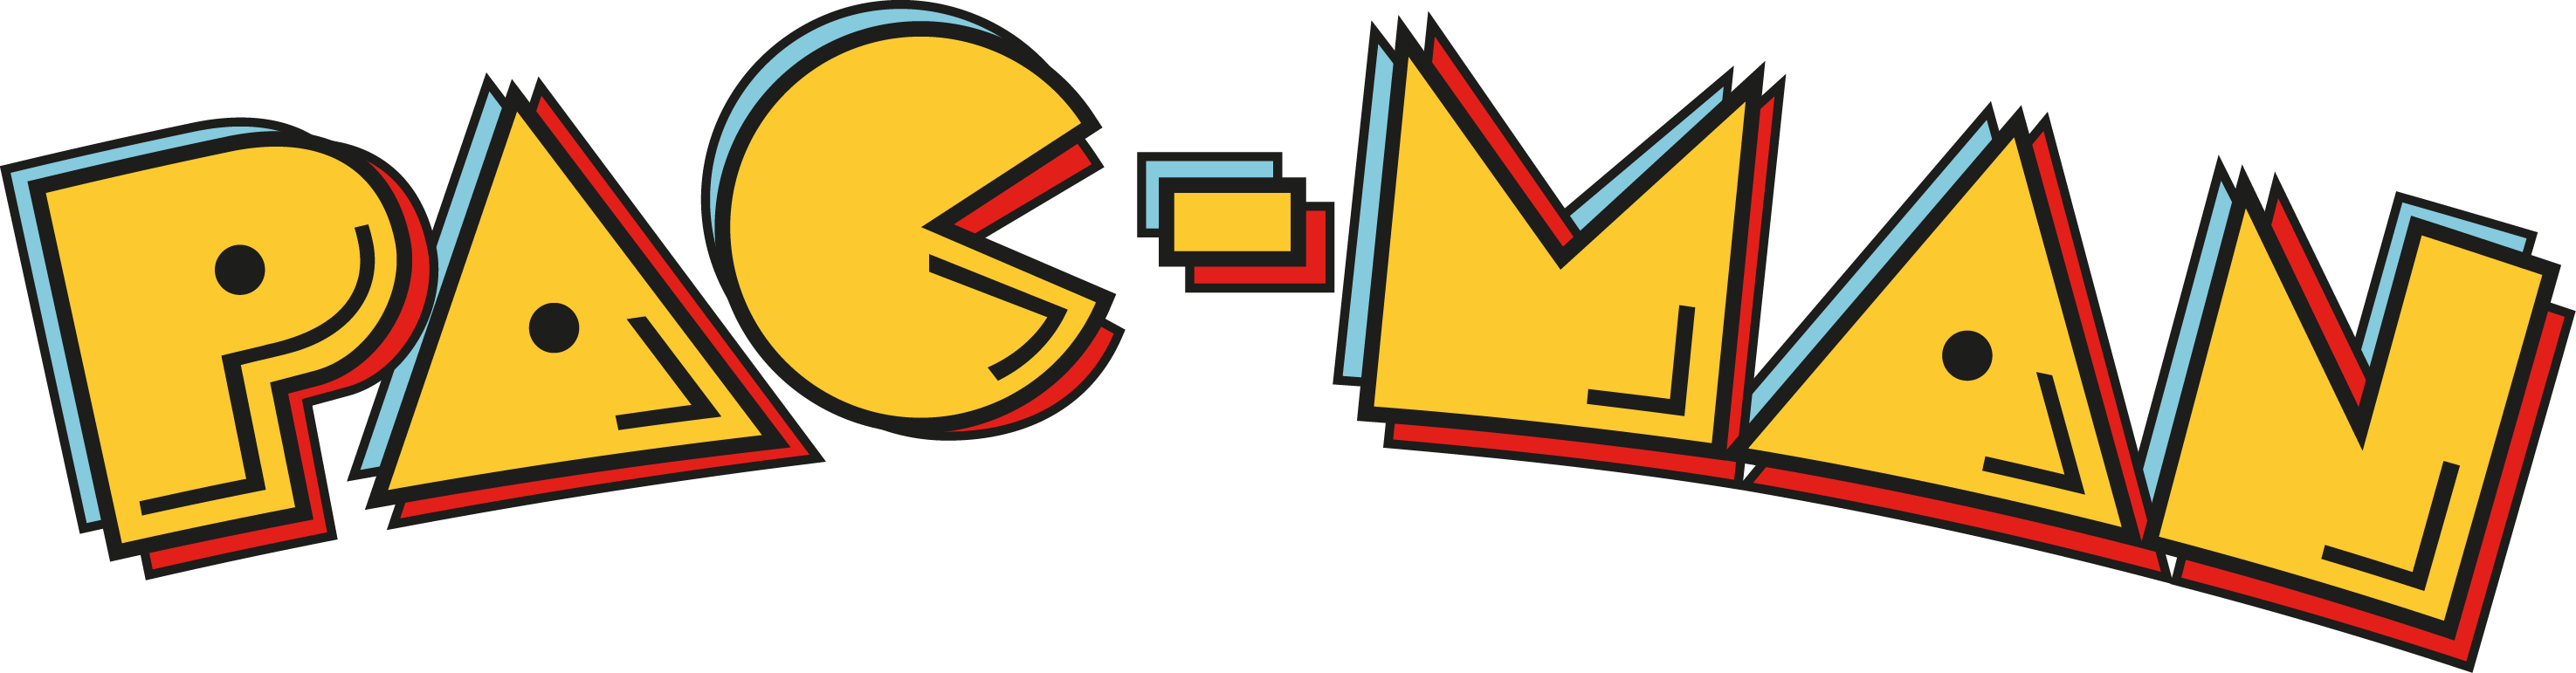 Ms. Pac-Man Logo PNG HD